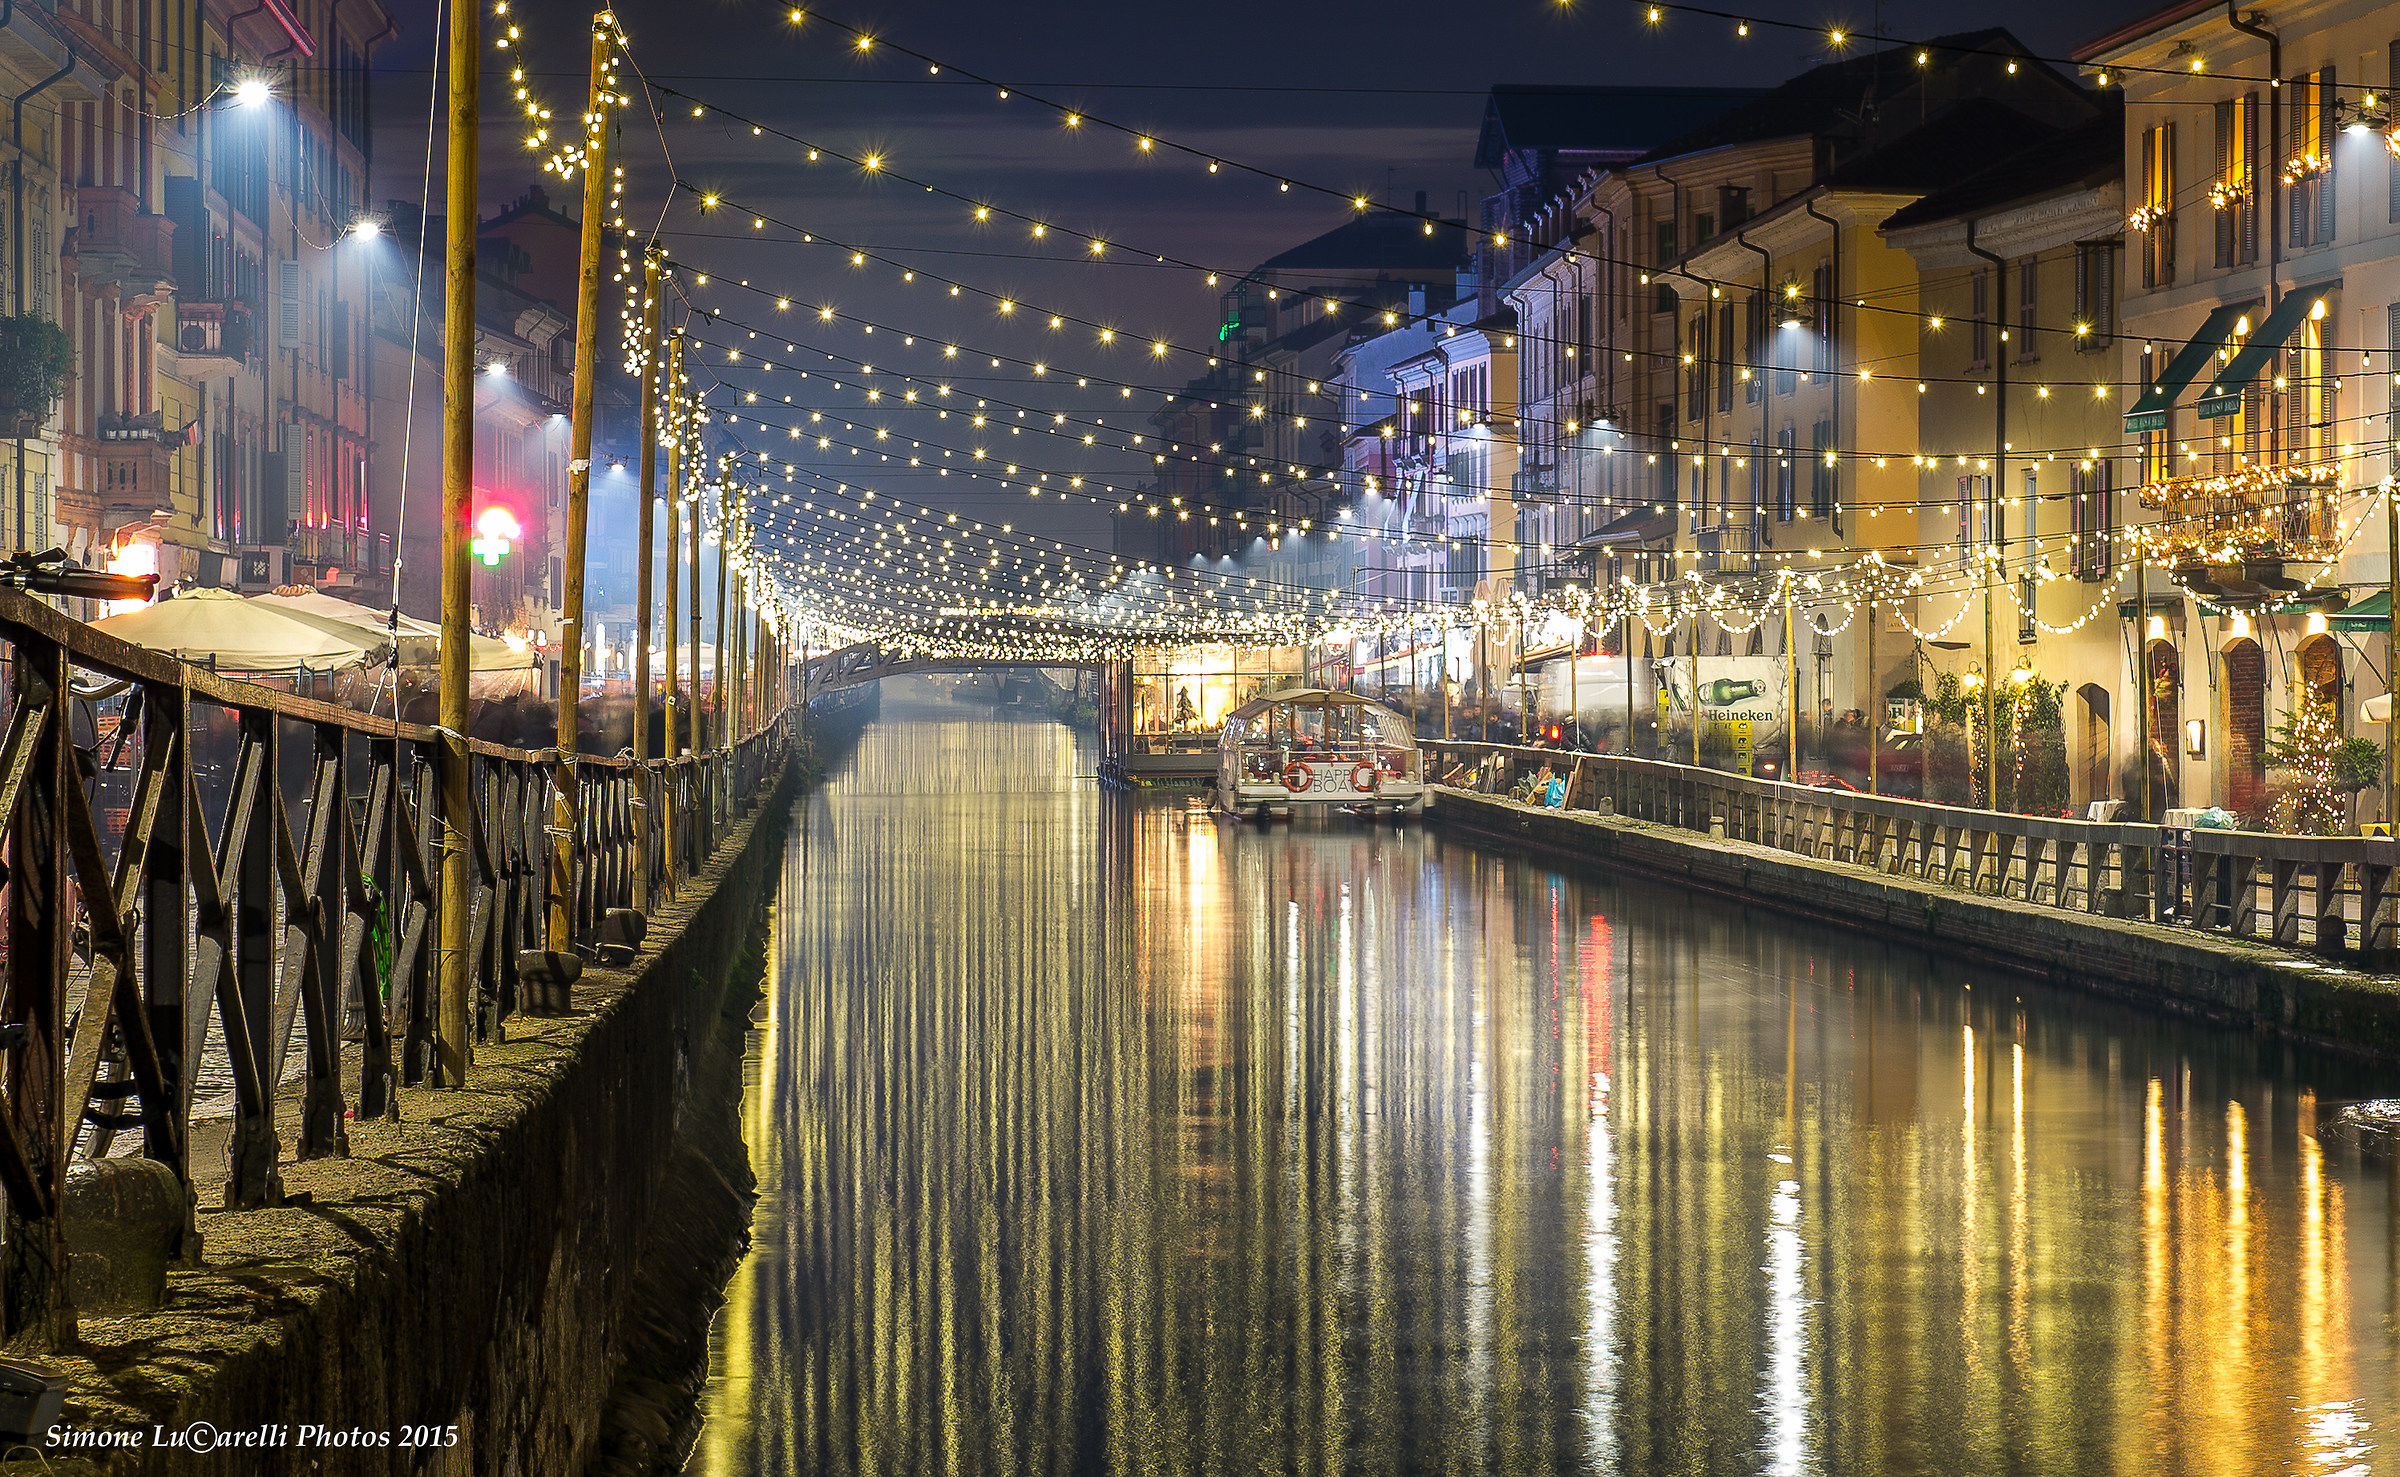 1000 lights of the waterway in Milan...